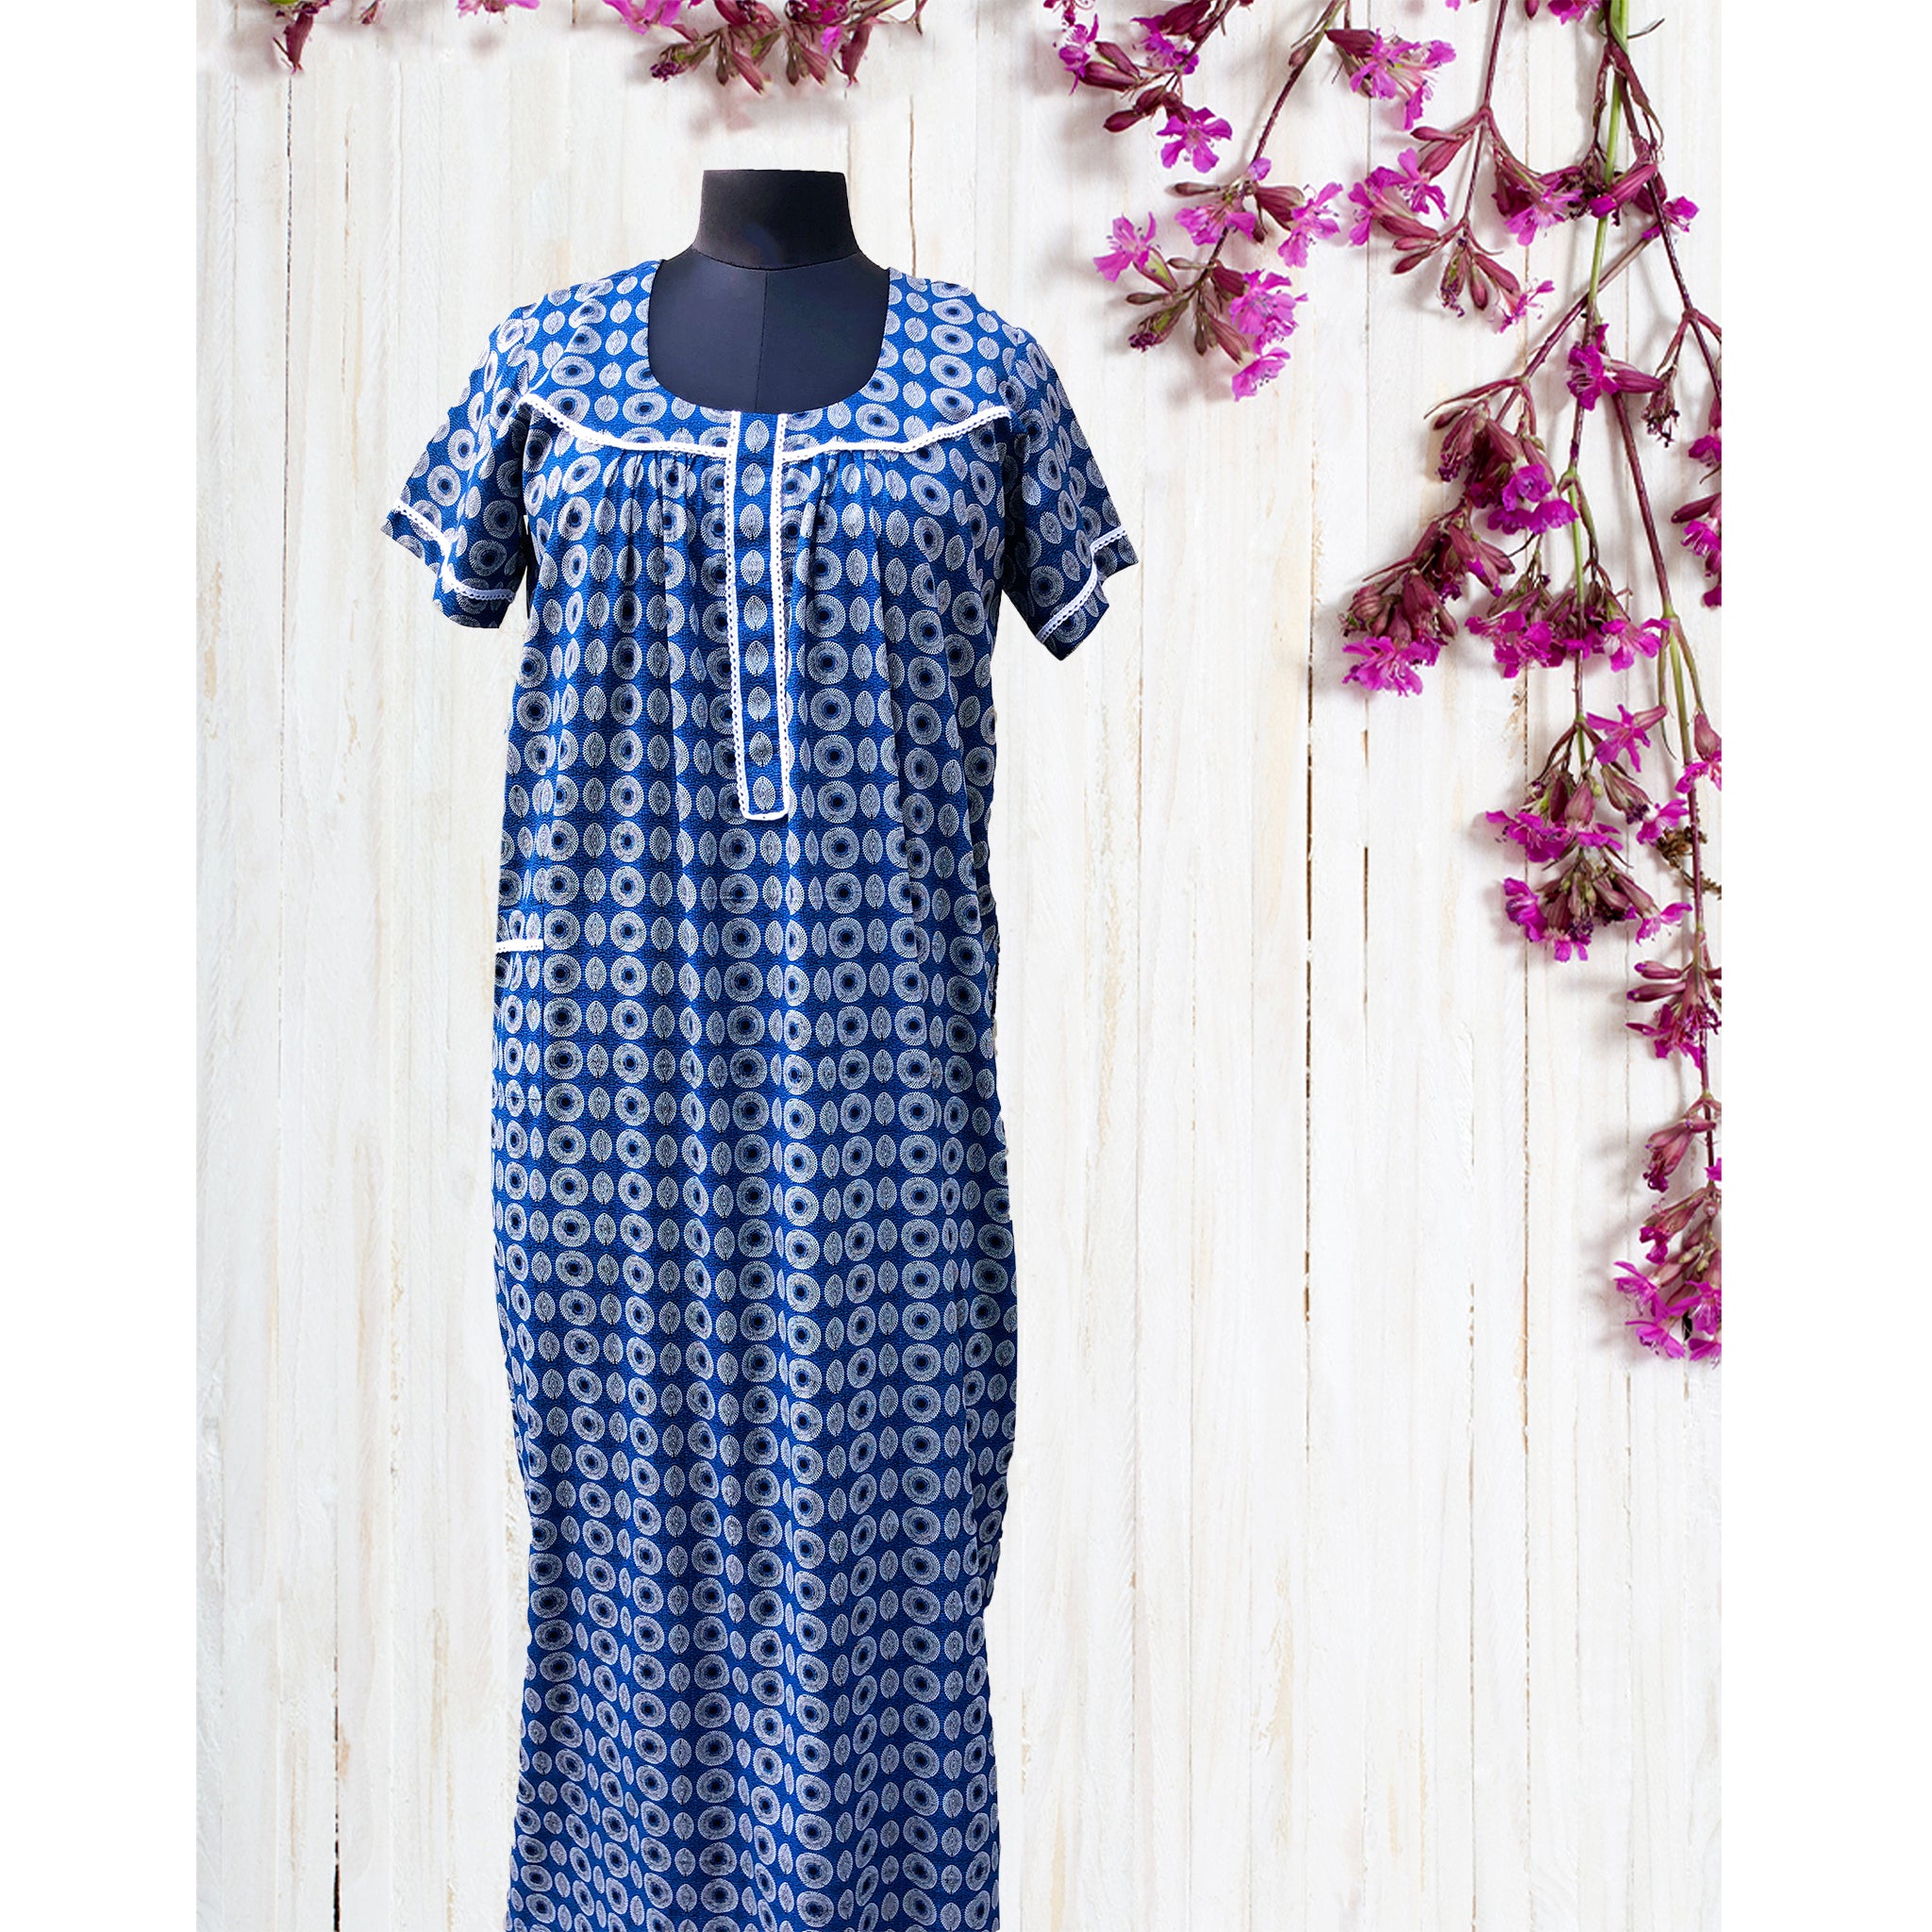 Women Night Dress Price in India - Buy Women Night Dress online at Shopsy.in